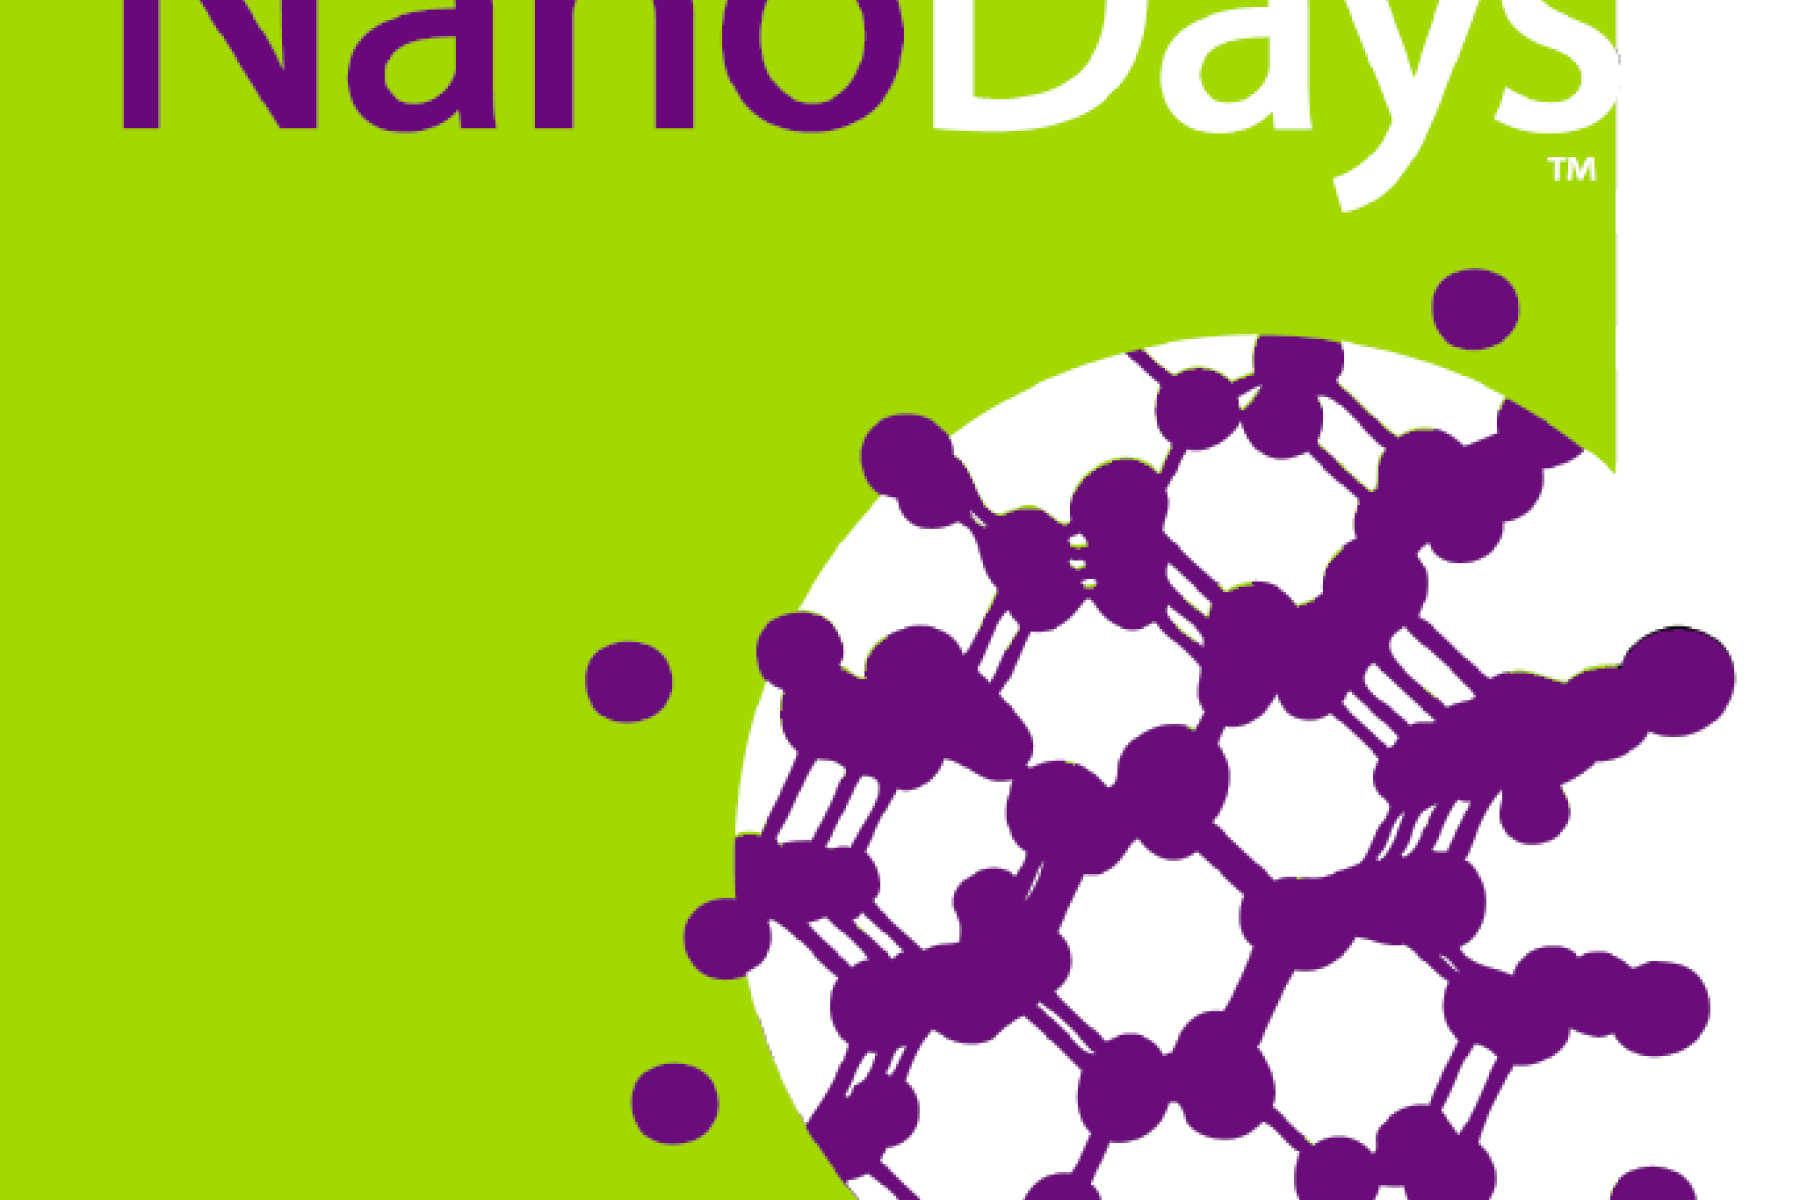 Green NanoDays logo with purple buckeyball image